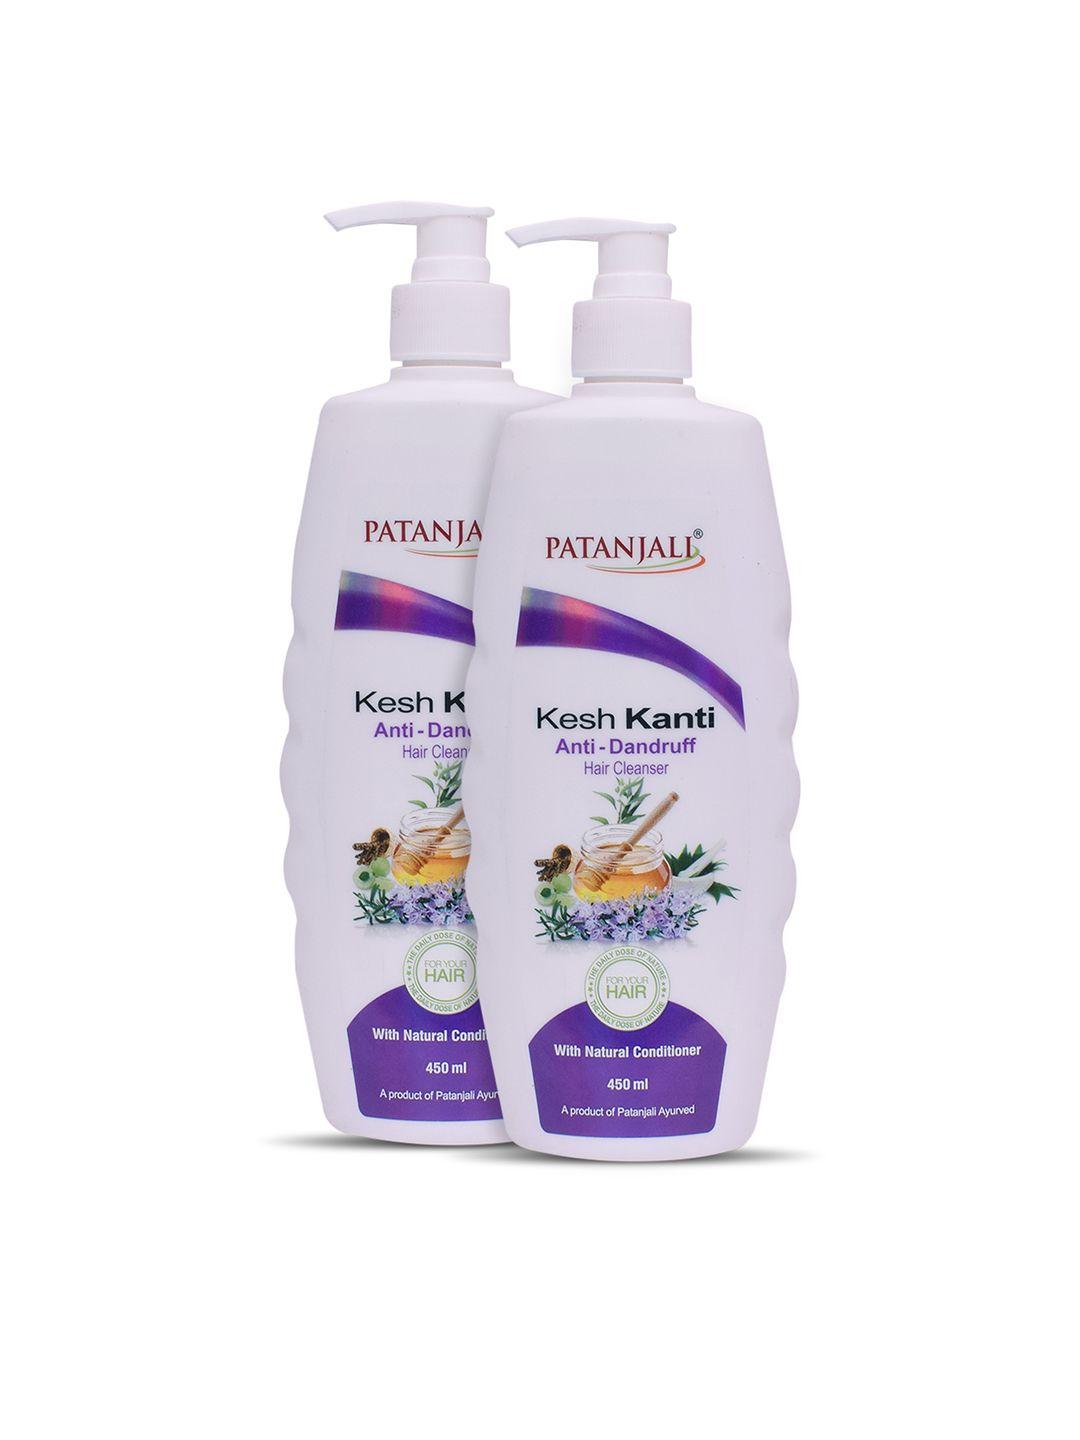 patanjali set of 2 kesh kanti anti dandruff hair cleanser for smooth hair - 450 ml each